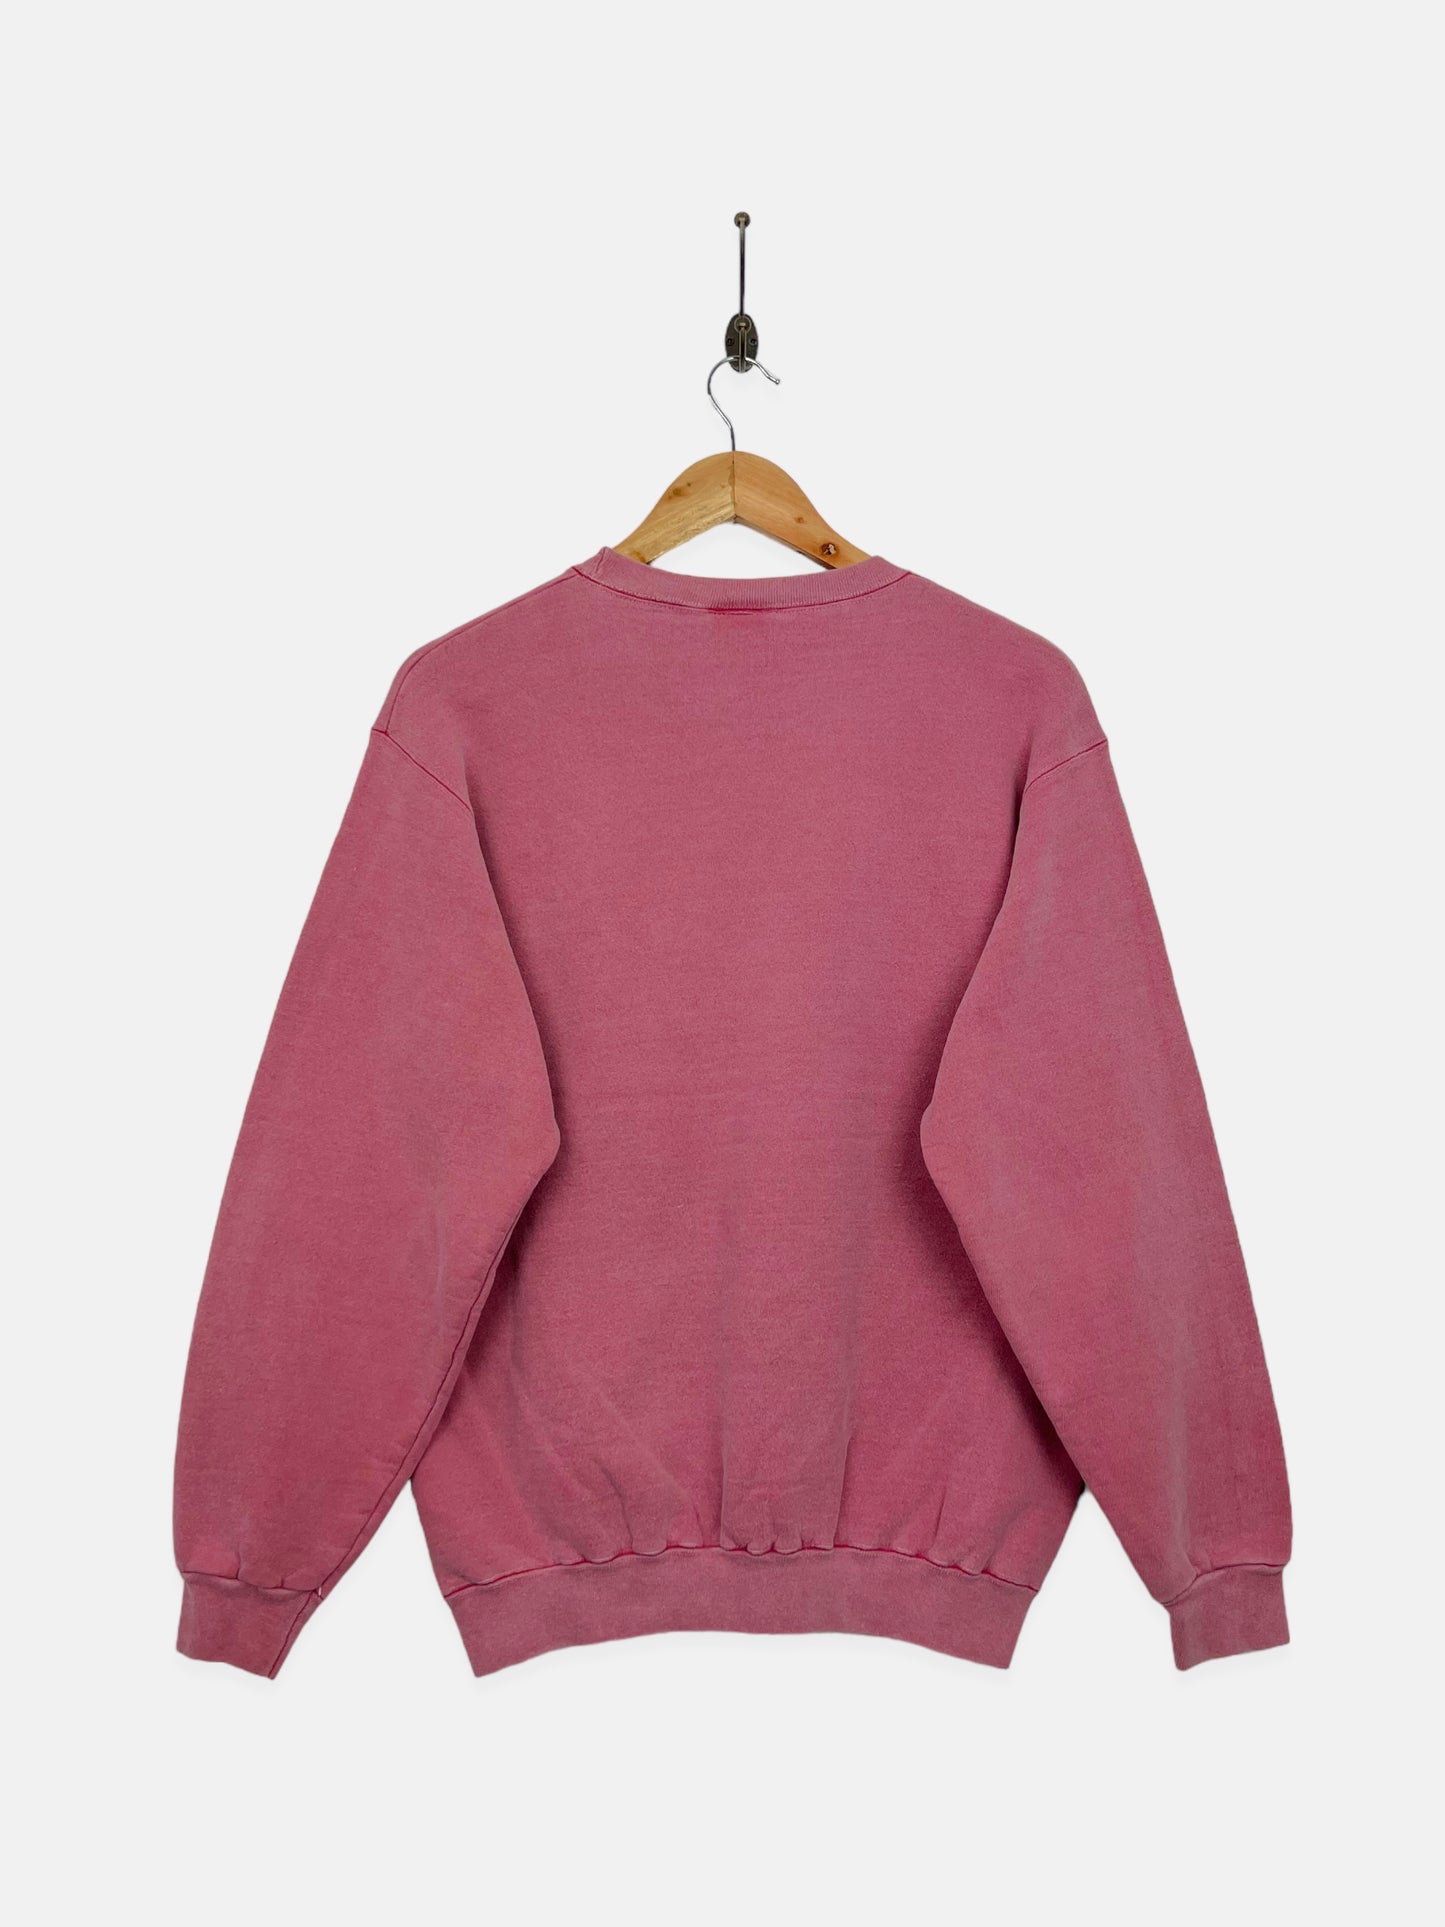 90's Sakonnet Vineyards Embroidered Vintage Sweatshirt Size 8-10